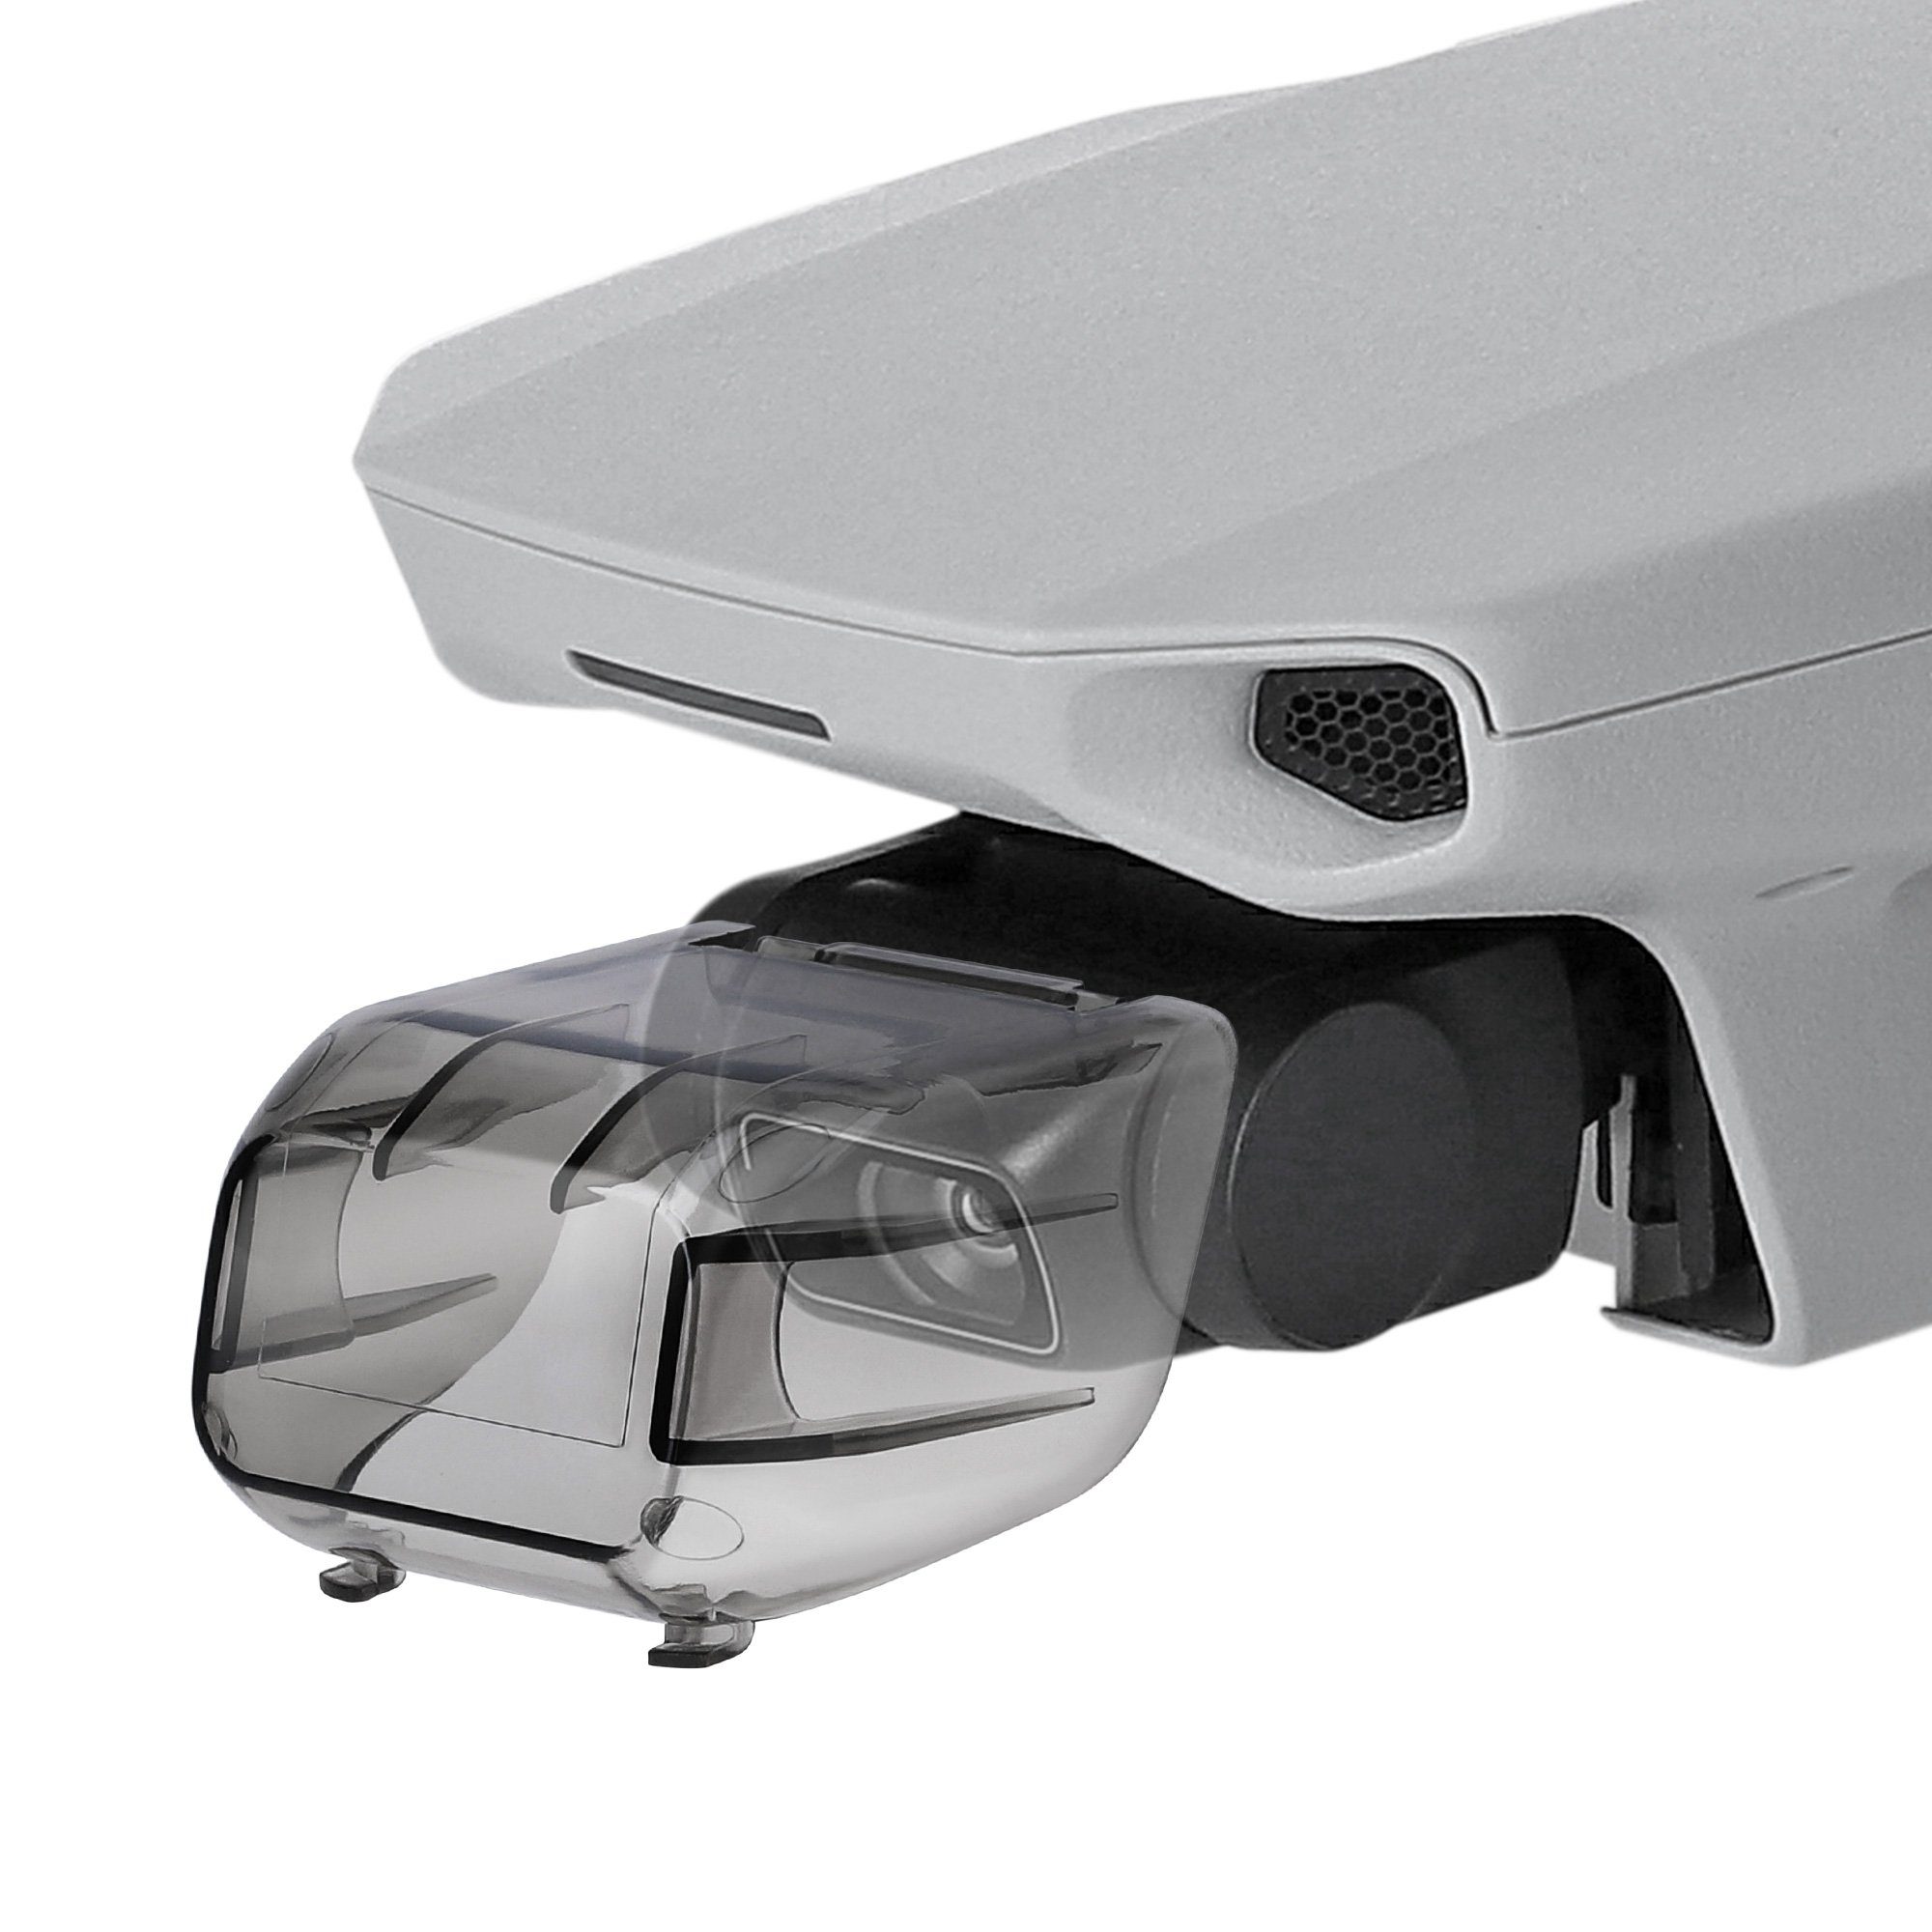 Mavic für Mini SE kwmobile Zubehör Sperre / Kamera Gimbal Mini Protector) DJI Objektiv Schutzhülle für - Drohne (Cover 2 - Mini / Hülle Kappe Drohnen